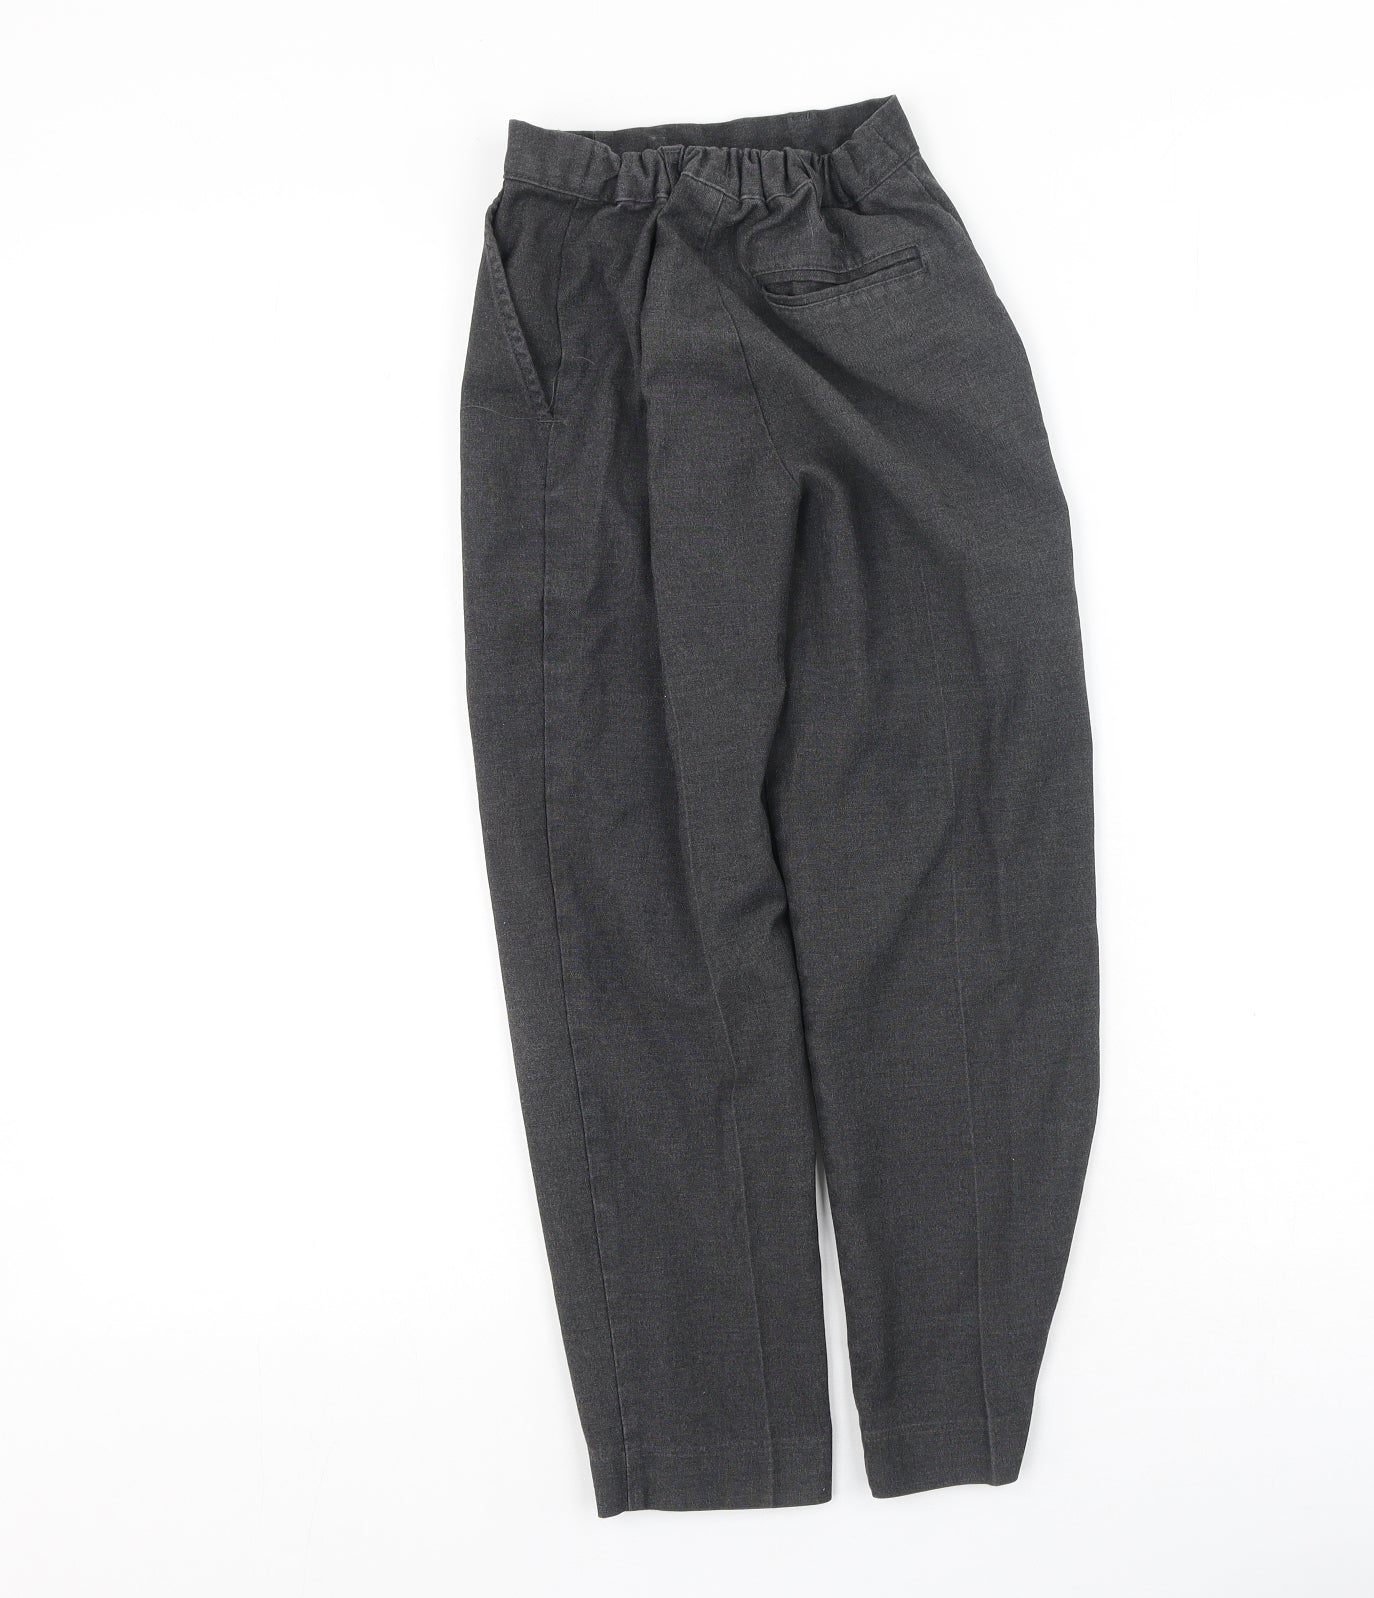 TU Boys Grey  Polyester Dress Pants Trousers Size 8 Years  Regular